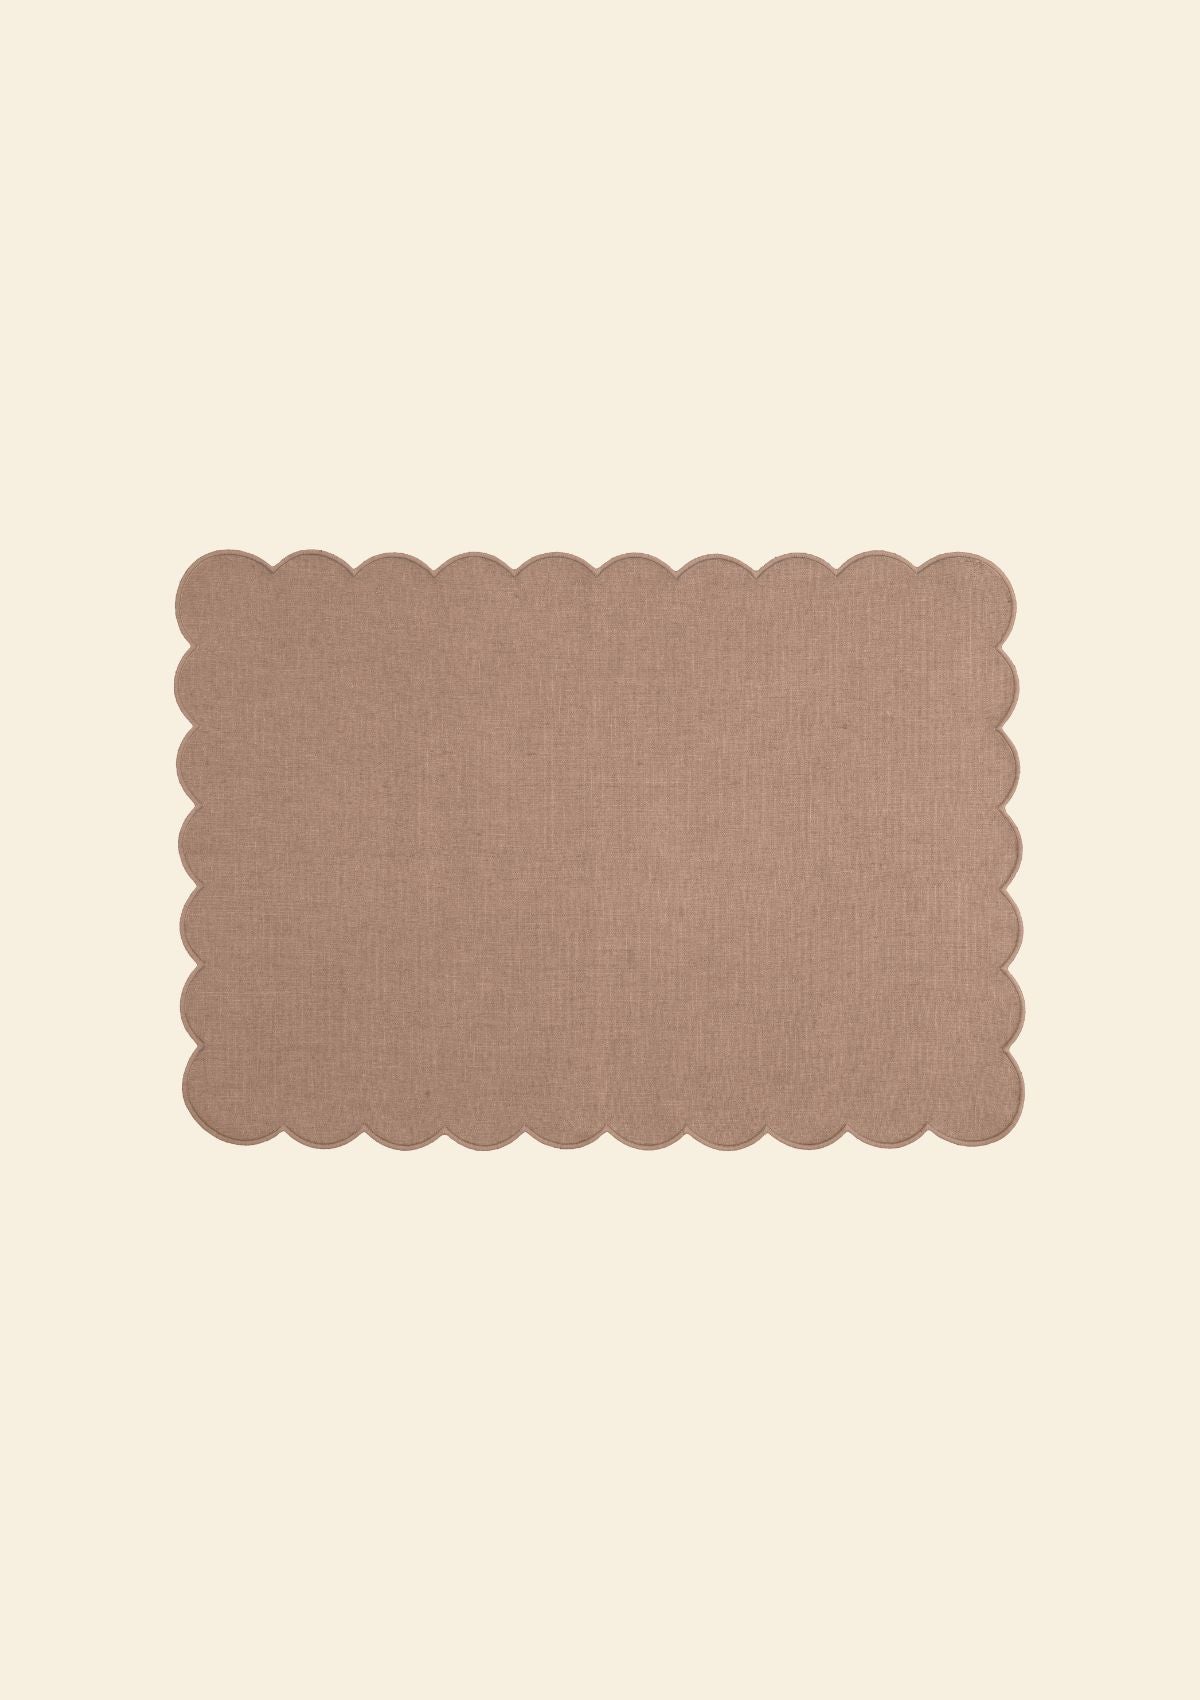 Scalloped rectangular placemats in Powder pink linen